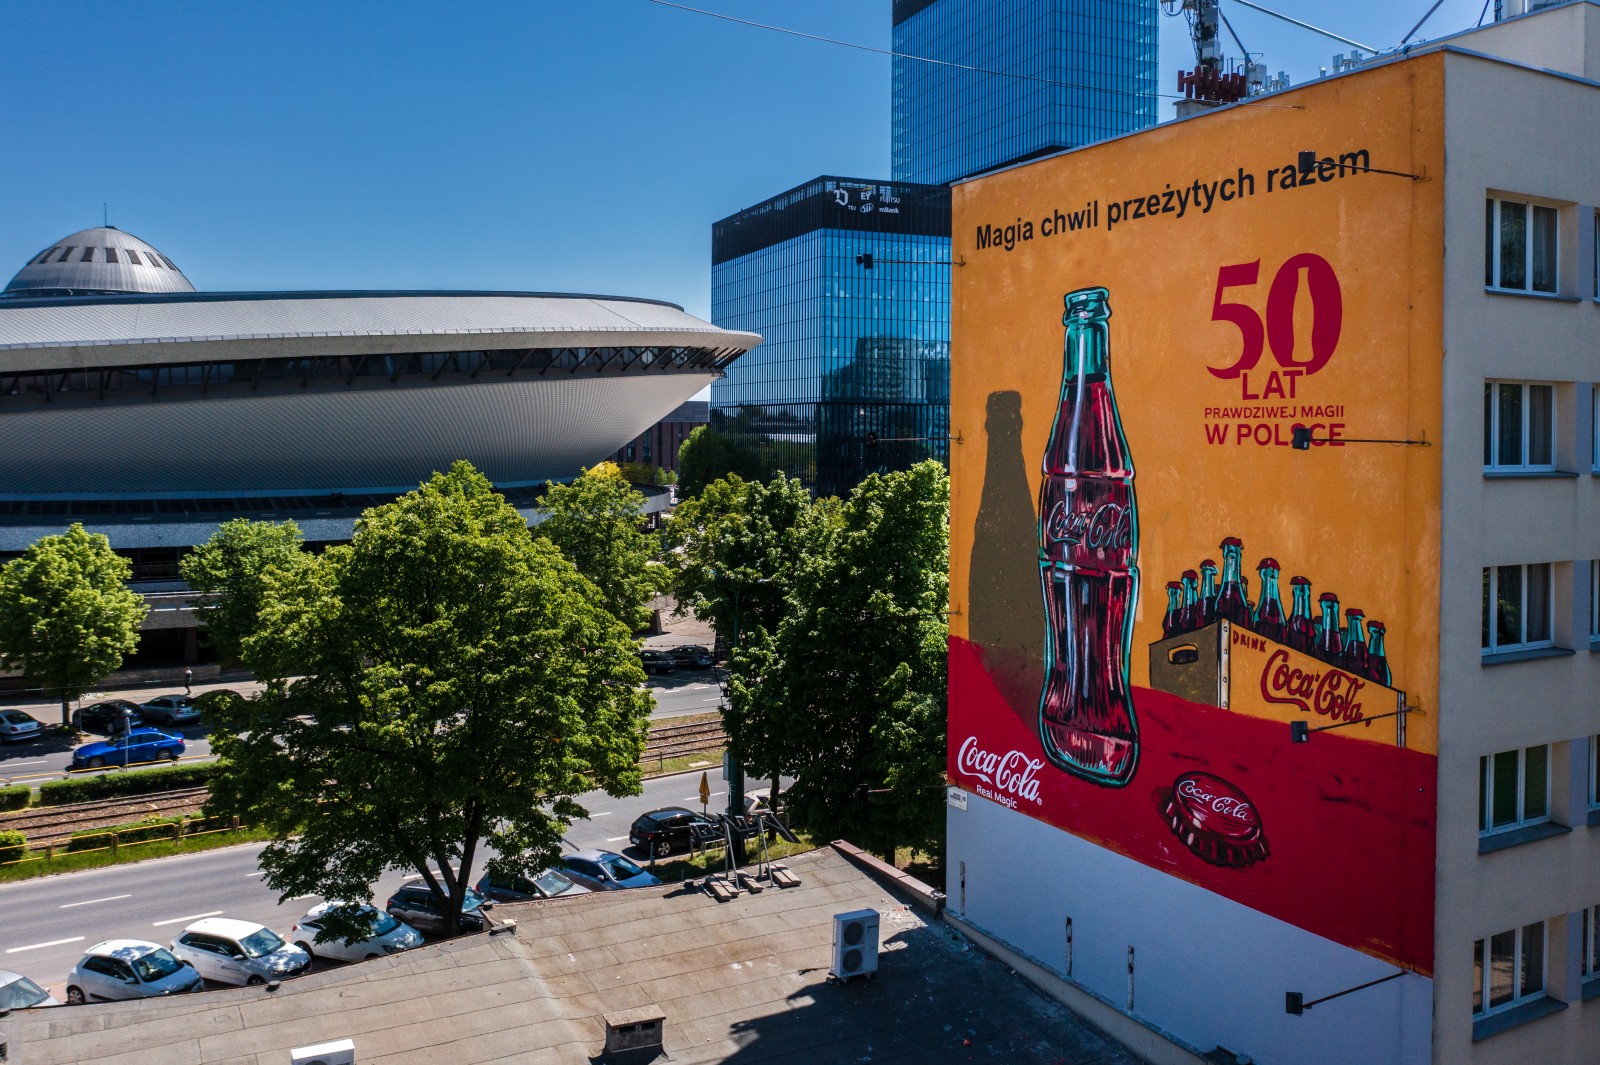 Advertising mural for Coca-Coli on Francuska street in Katowice | 50 lat prawdziwej magii w Polsce (retro) | Portfolio